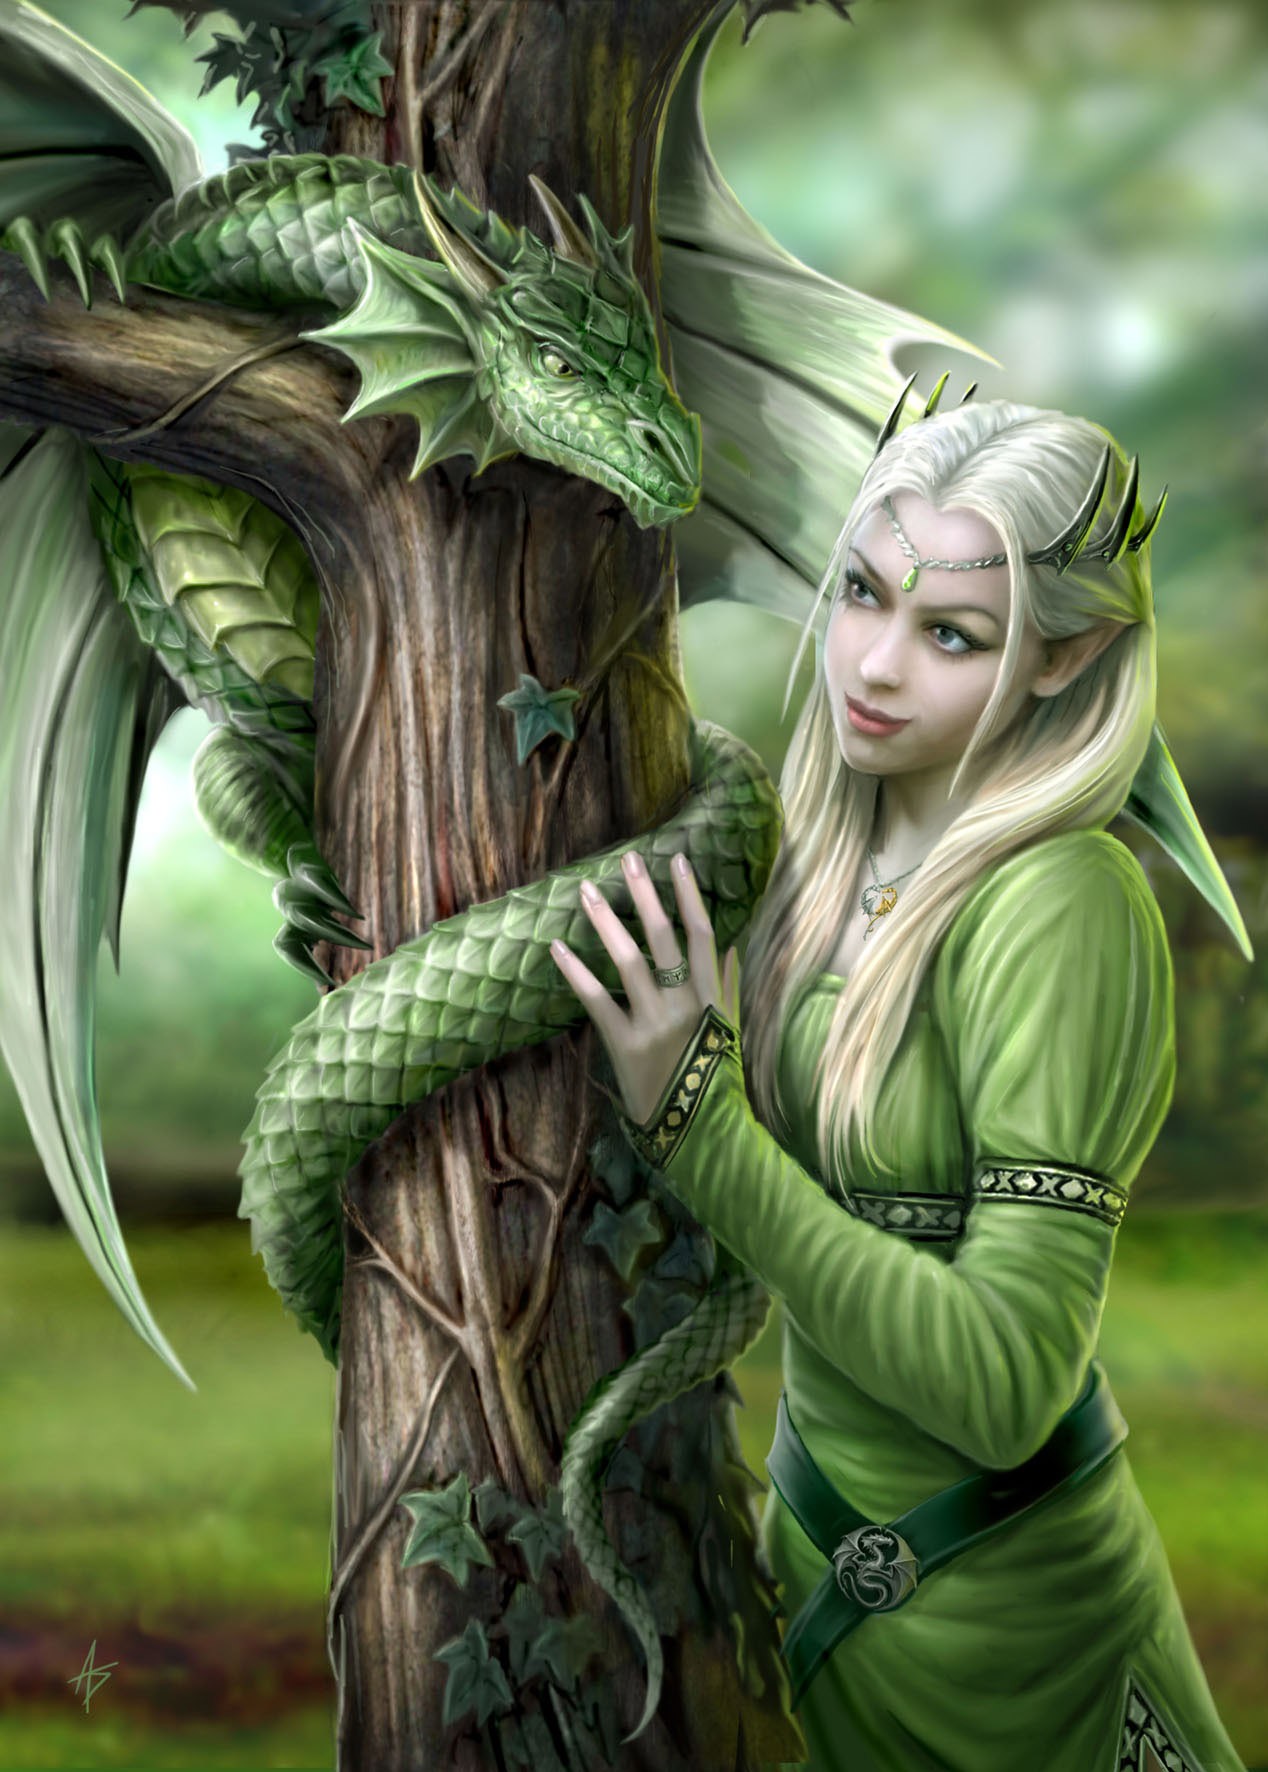 women, Anne Stokes, Blonde, Long hair, Elves, Fantasy art, Dragon, Portrait display, Trees, Branch, Wings, Green dress, Leaves Wallpaper